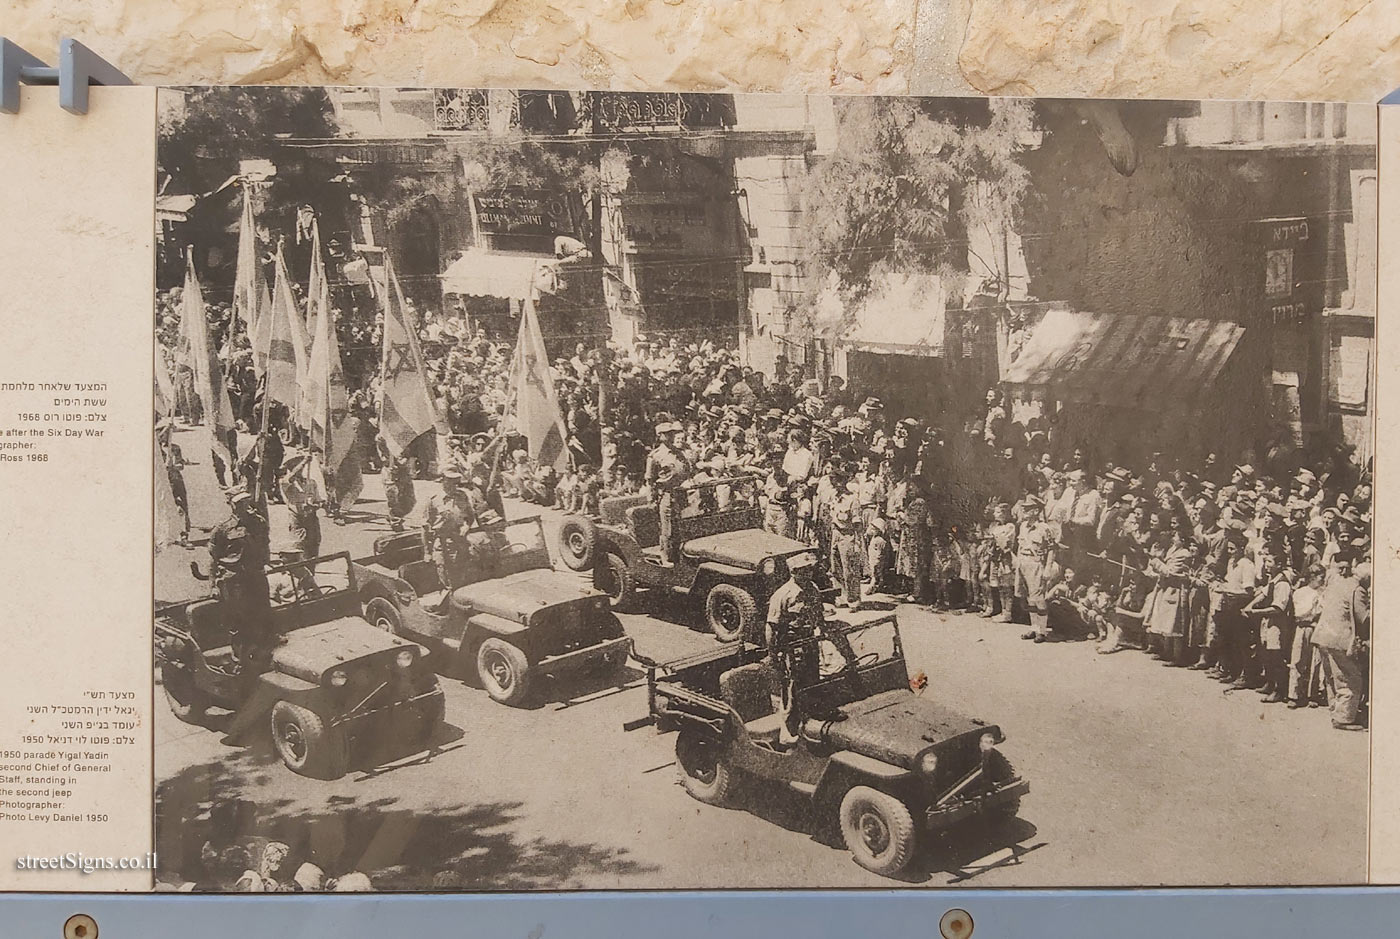 Jerusalem - Photograph in stone - IDF parades in Jerusalem - Board 3 - Safra Square 4, Jerusalem